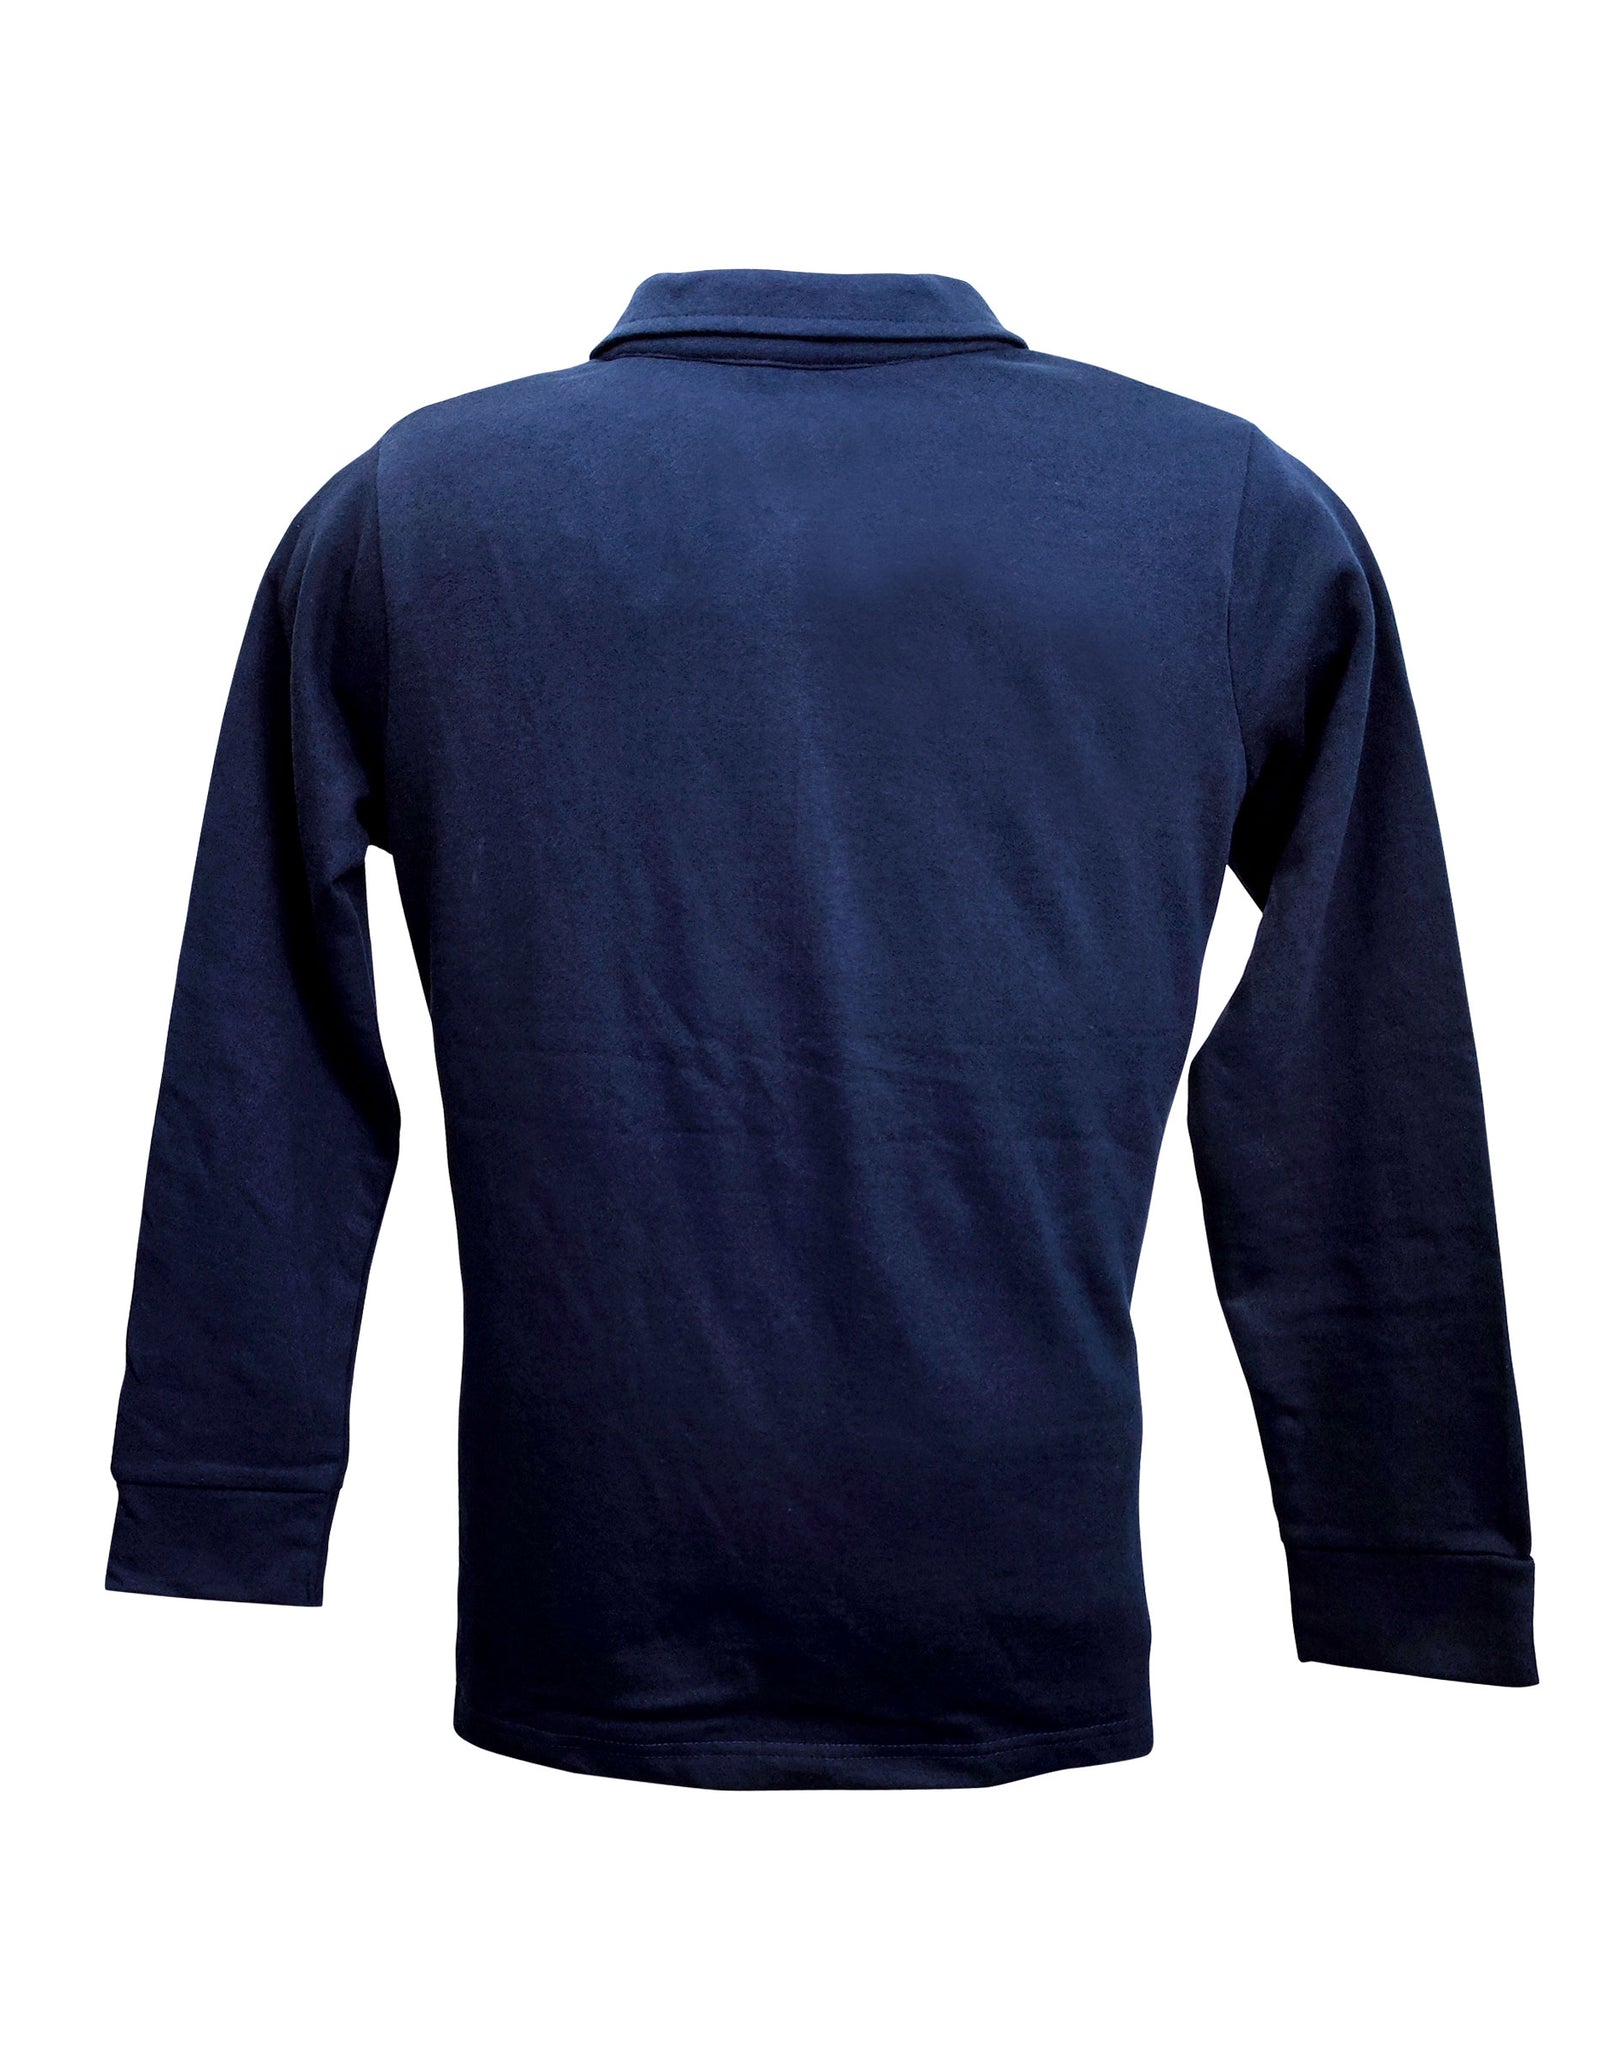 Sweatshirt for Women  - Navy Blue